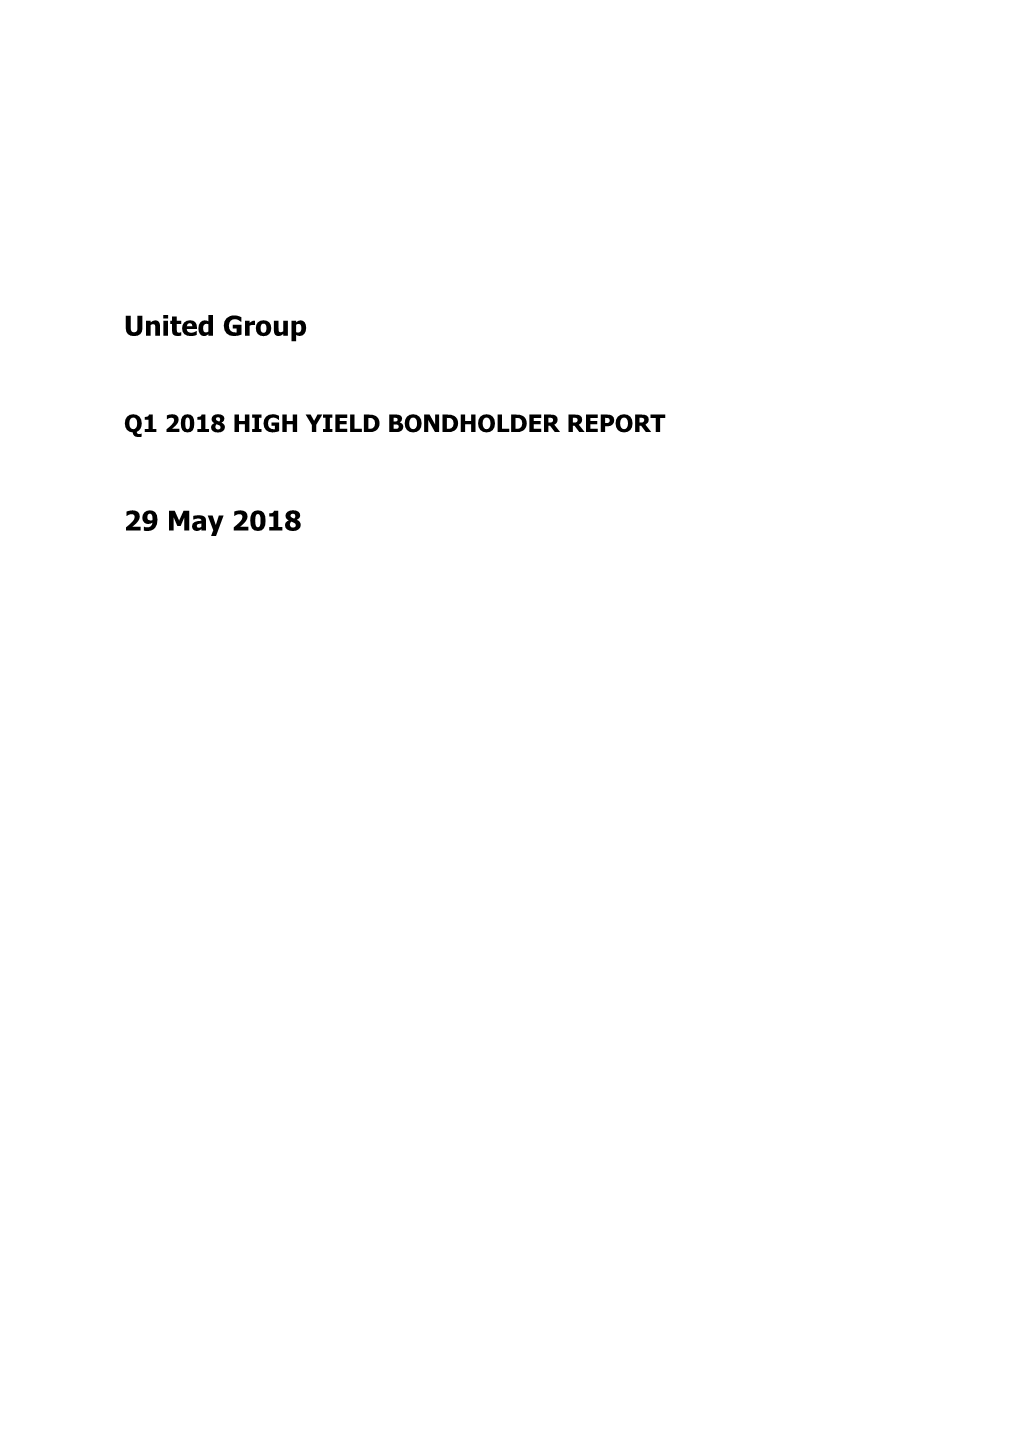 United Group 29 May 2018